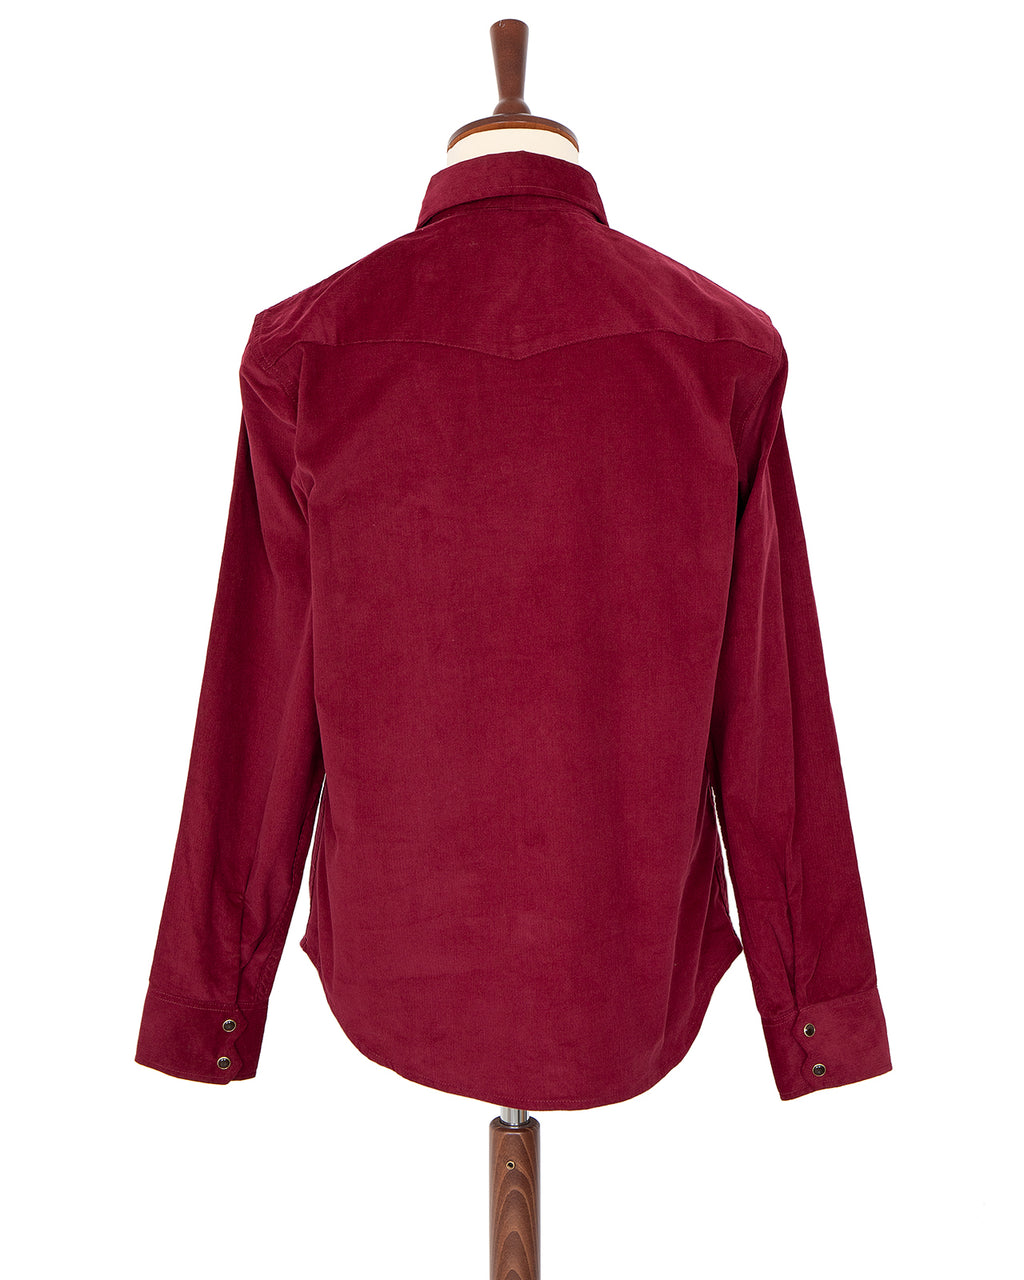 Indigofera Dollard Shirt, Cotton Corduroy, Burgundy